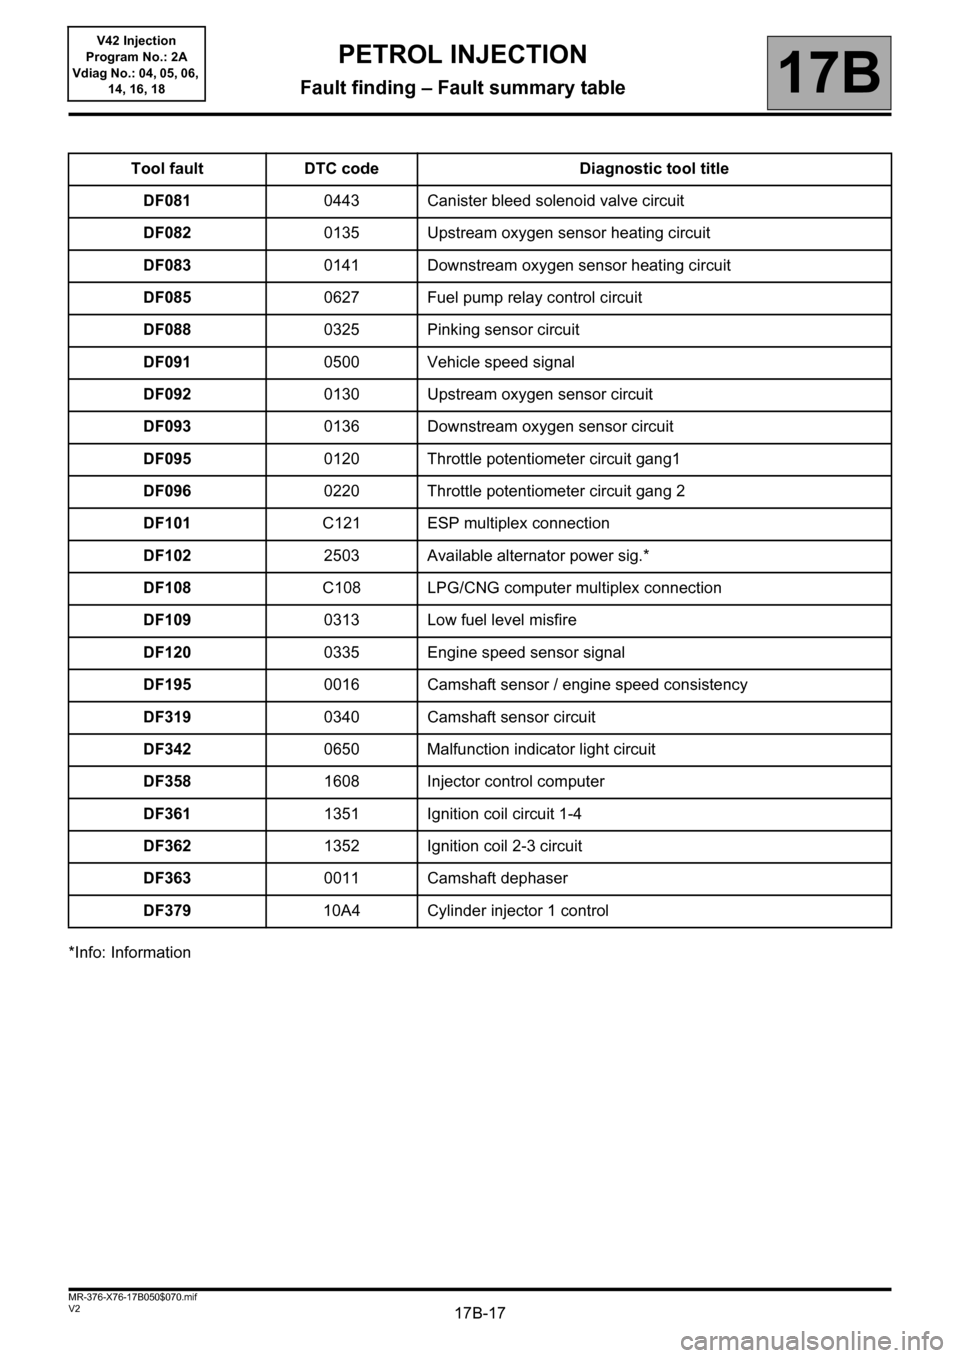 RENAULT KANGOO 2013 X61 / 2.G Petrol V42 Injection Workshop Manual 17B-17V2 MR-376-X76-17B050$070.mif
PETROL INJECTION
Fault finding – Fault summary table17B
V42 Injection
Program No.: 2A
Vdiag No.: 04, 05, 06, 
14, 16, 18
*Info: InformationTool fault DTC code Diag